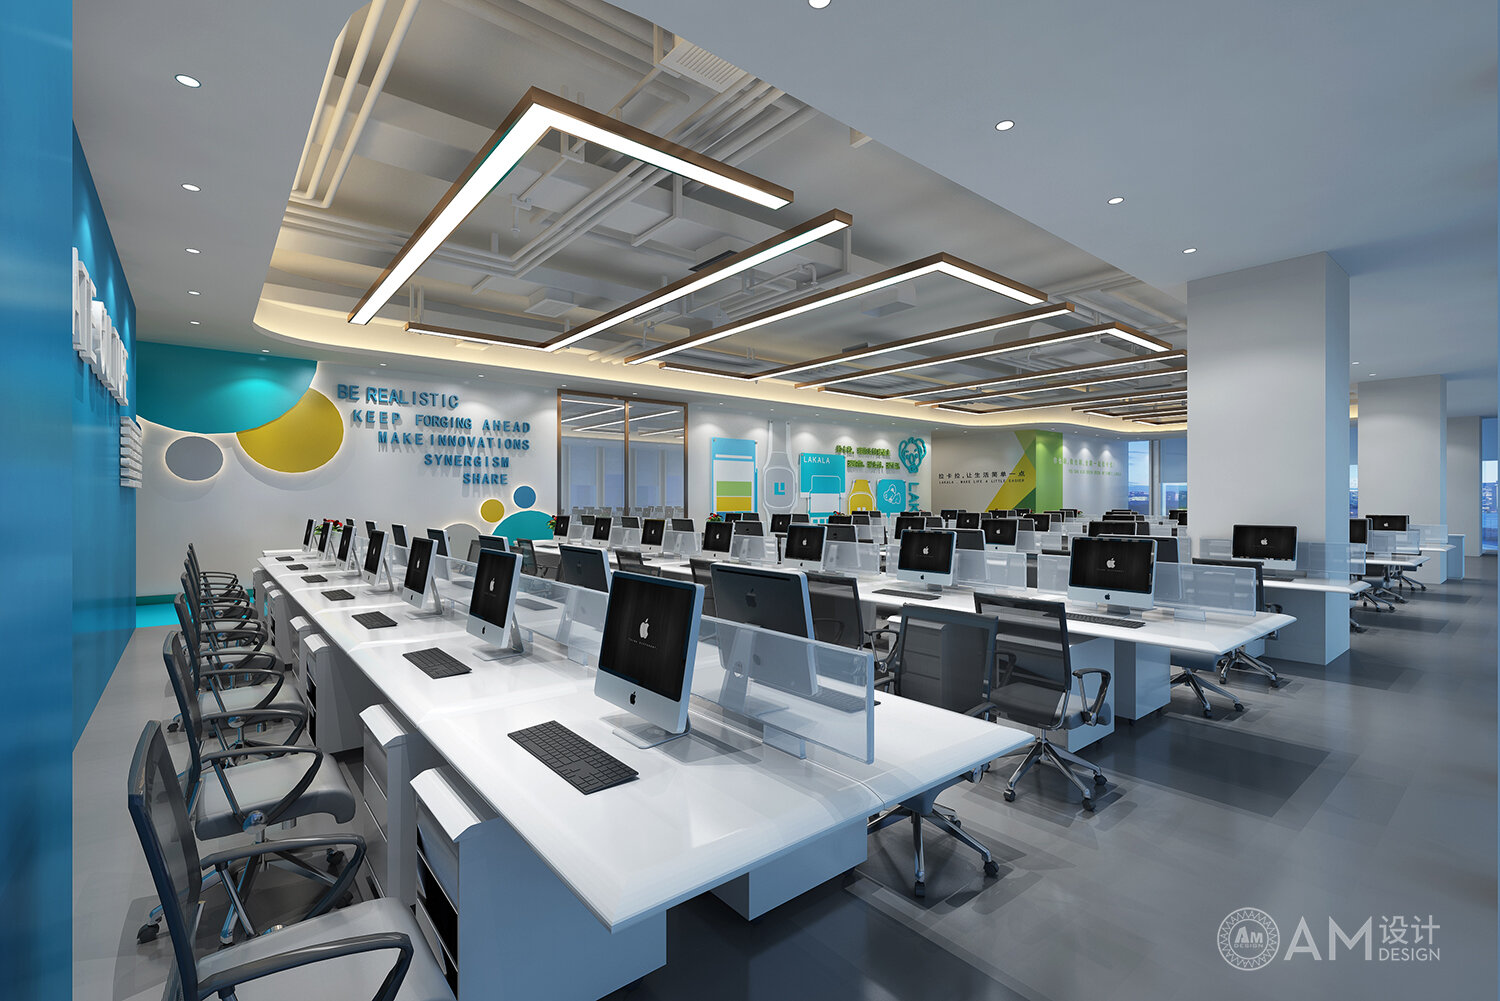 AM DESIGN | Office area design of Beijing Lakala Group office building